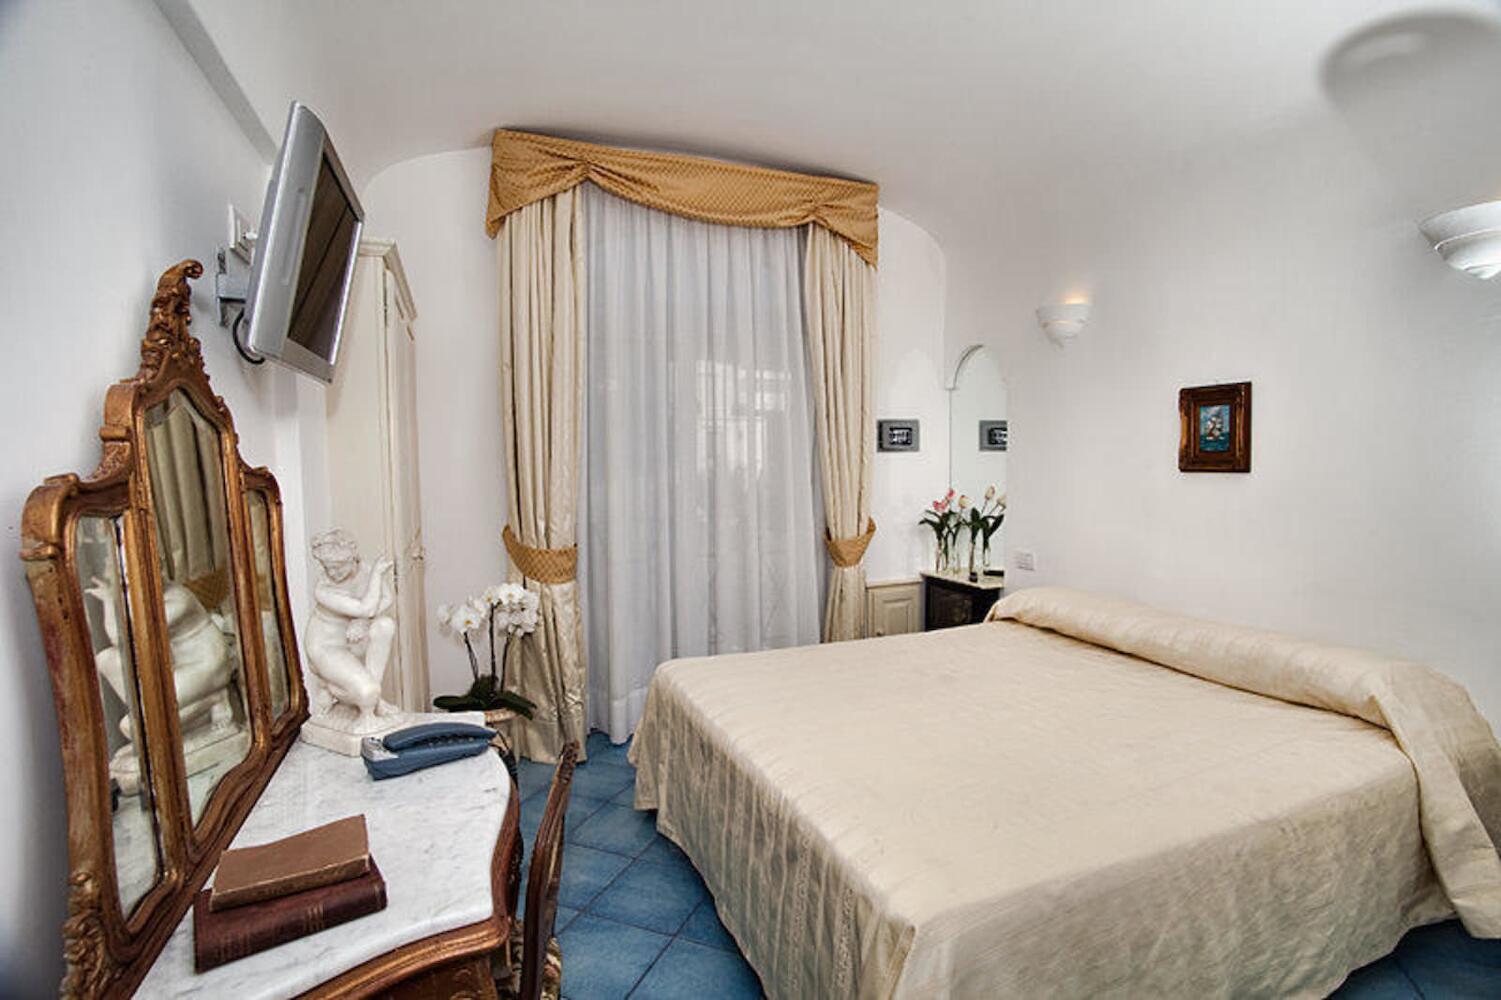 Hotel Bussola, Island of Capri